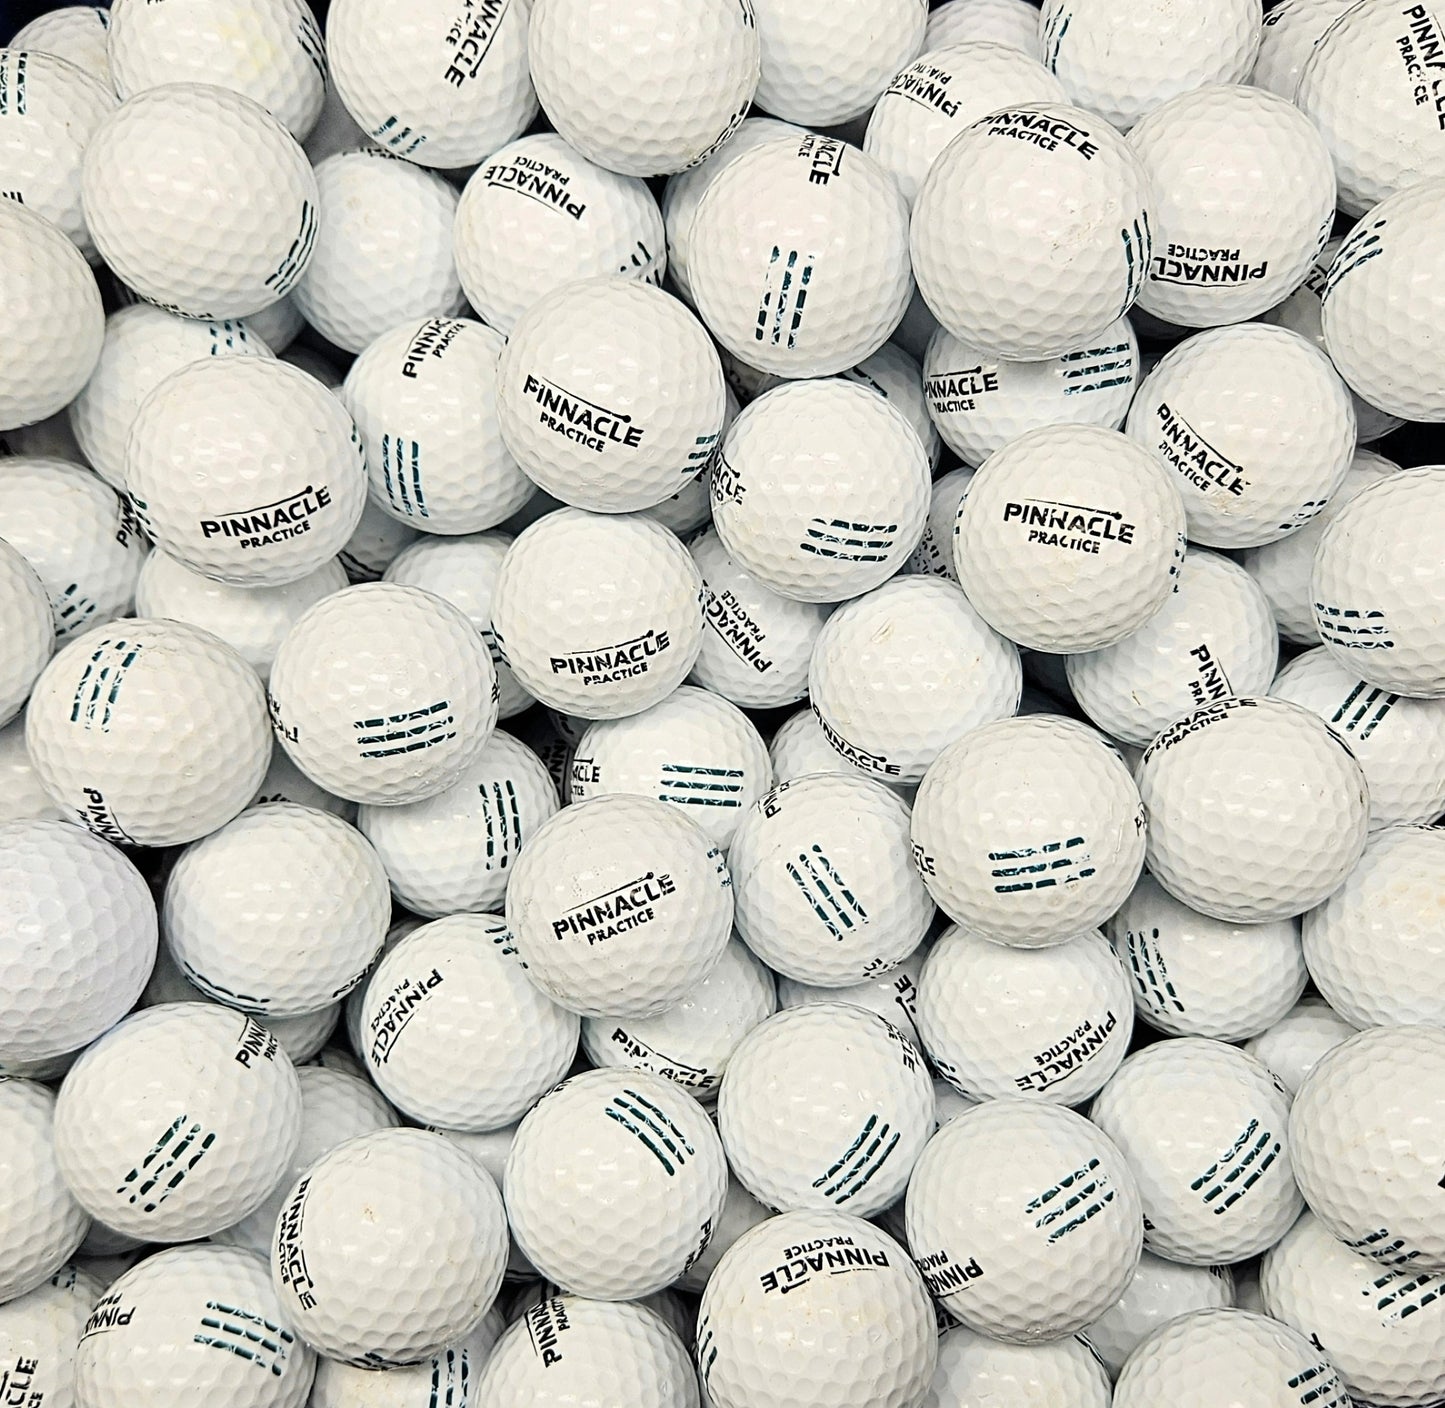 400 Mid Grade Green Stripe Pinnacle Range Used Golf Balls